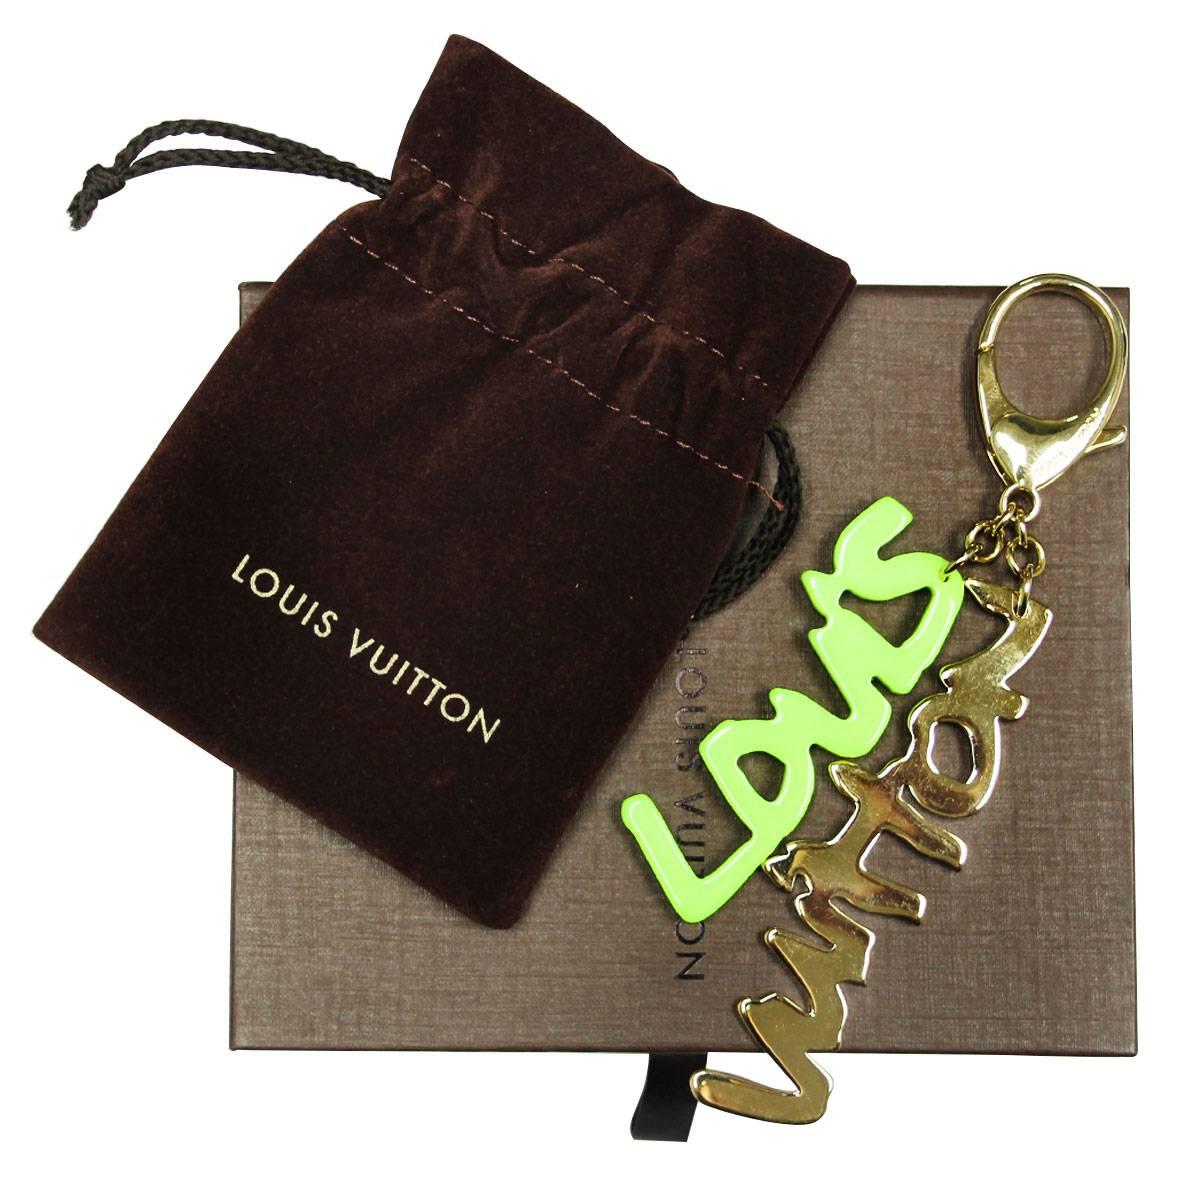 Company: Louis Vuitton
Style: Key Chain
Measurements: 6